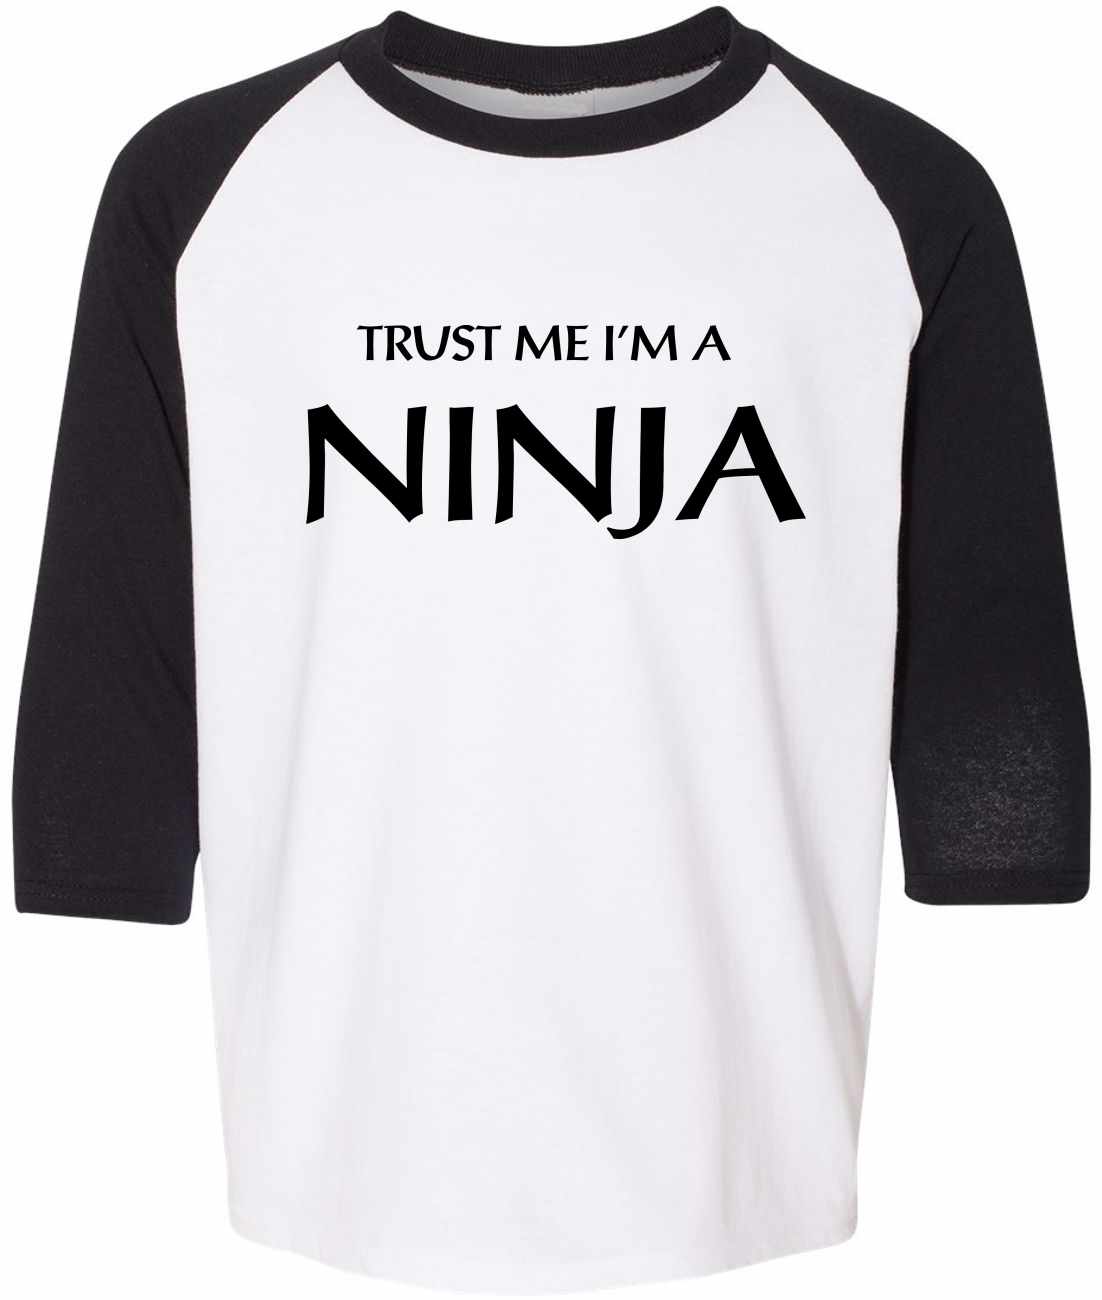 Trust Me I'm a NINJA on Youth Baseball Shirt (#774-212)